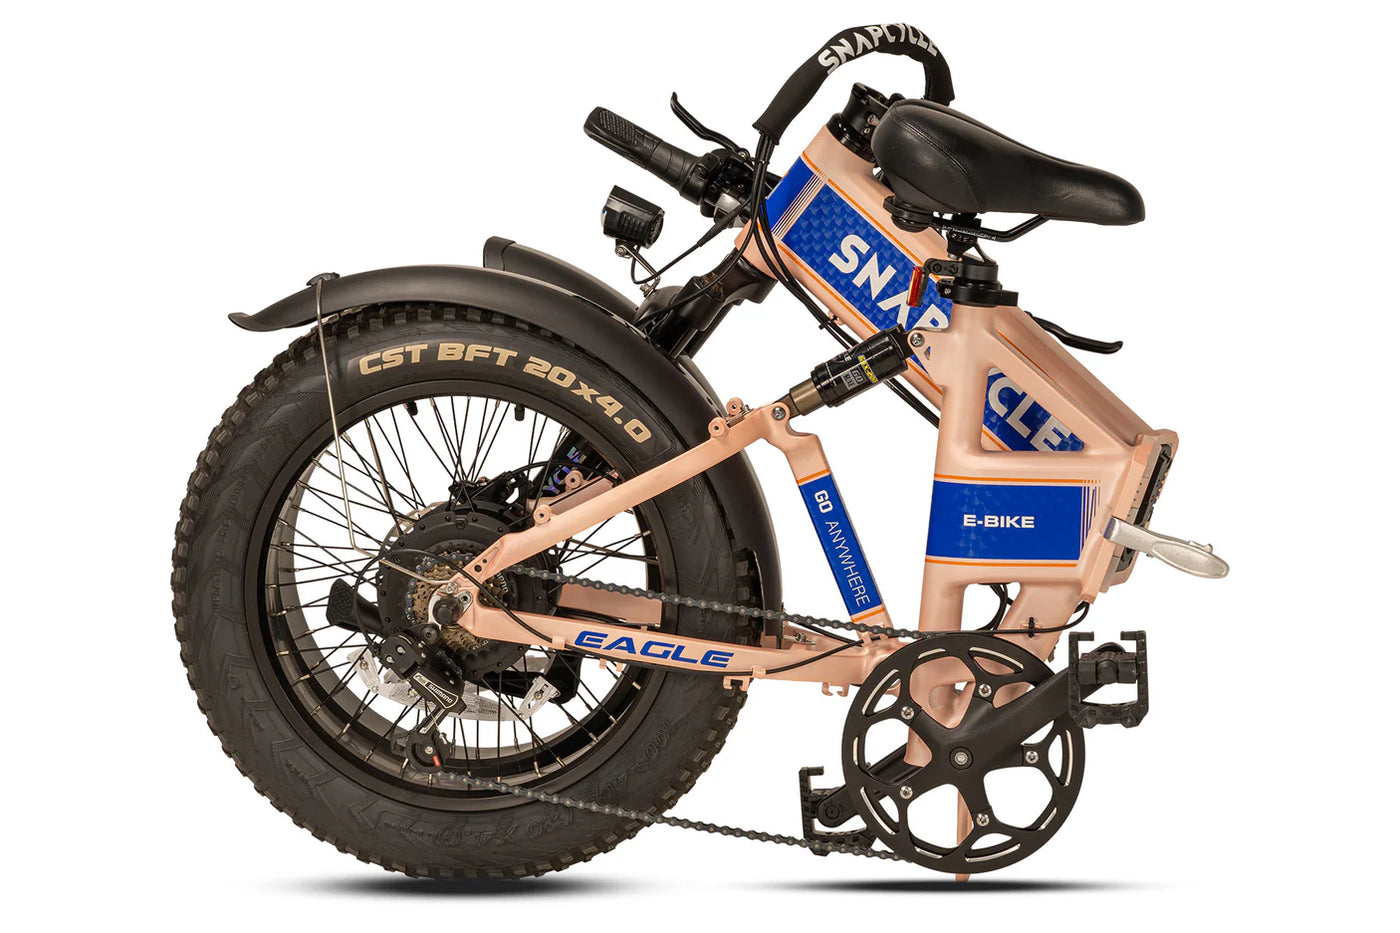 Snapcycle Eagle E-Bike 750W Brushless Geared Motor